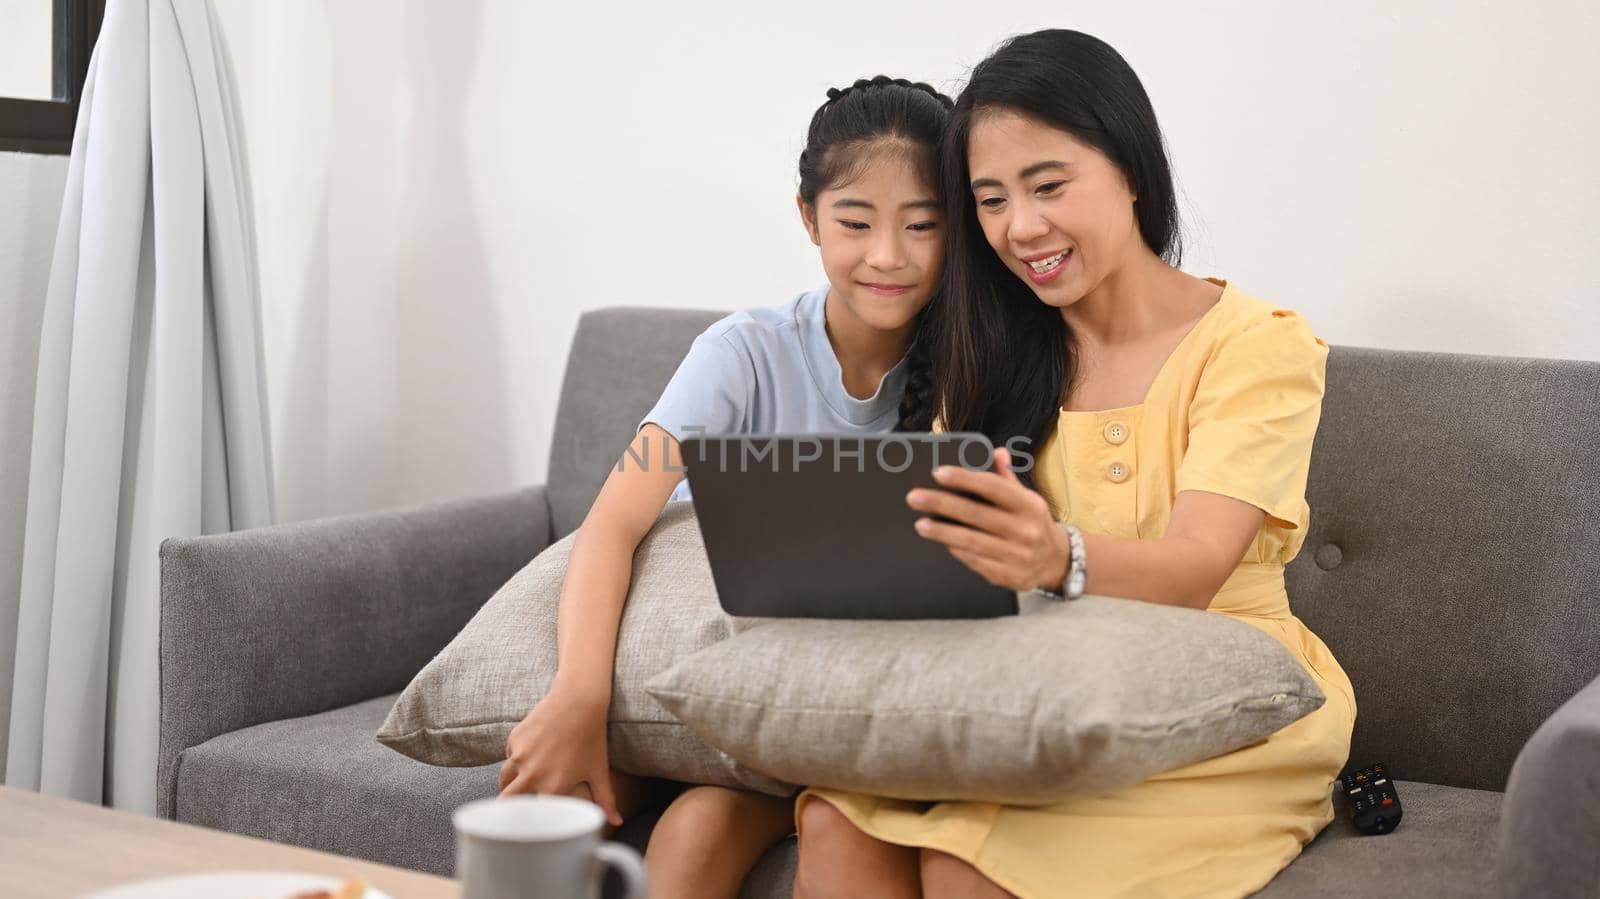 Smiling asian mom and daughter having fun browsing internet on digital tablet, enjoying spending free time together by prathanchorruangsak